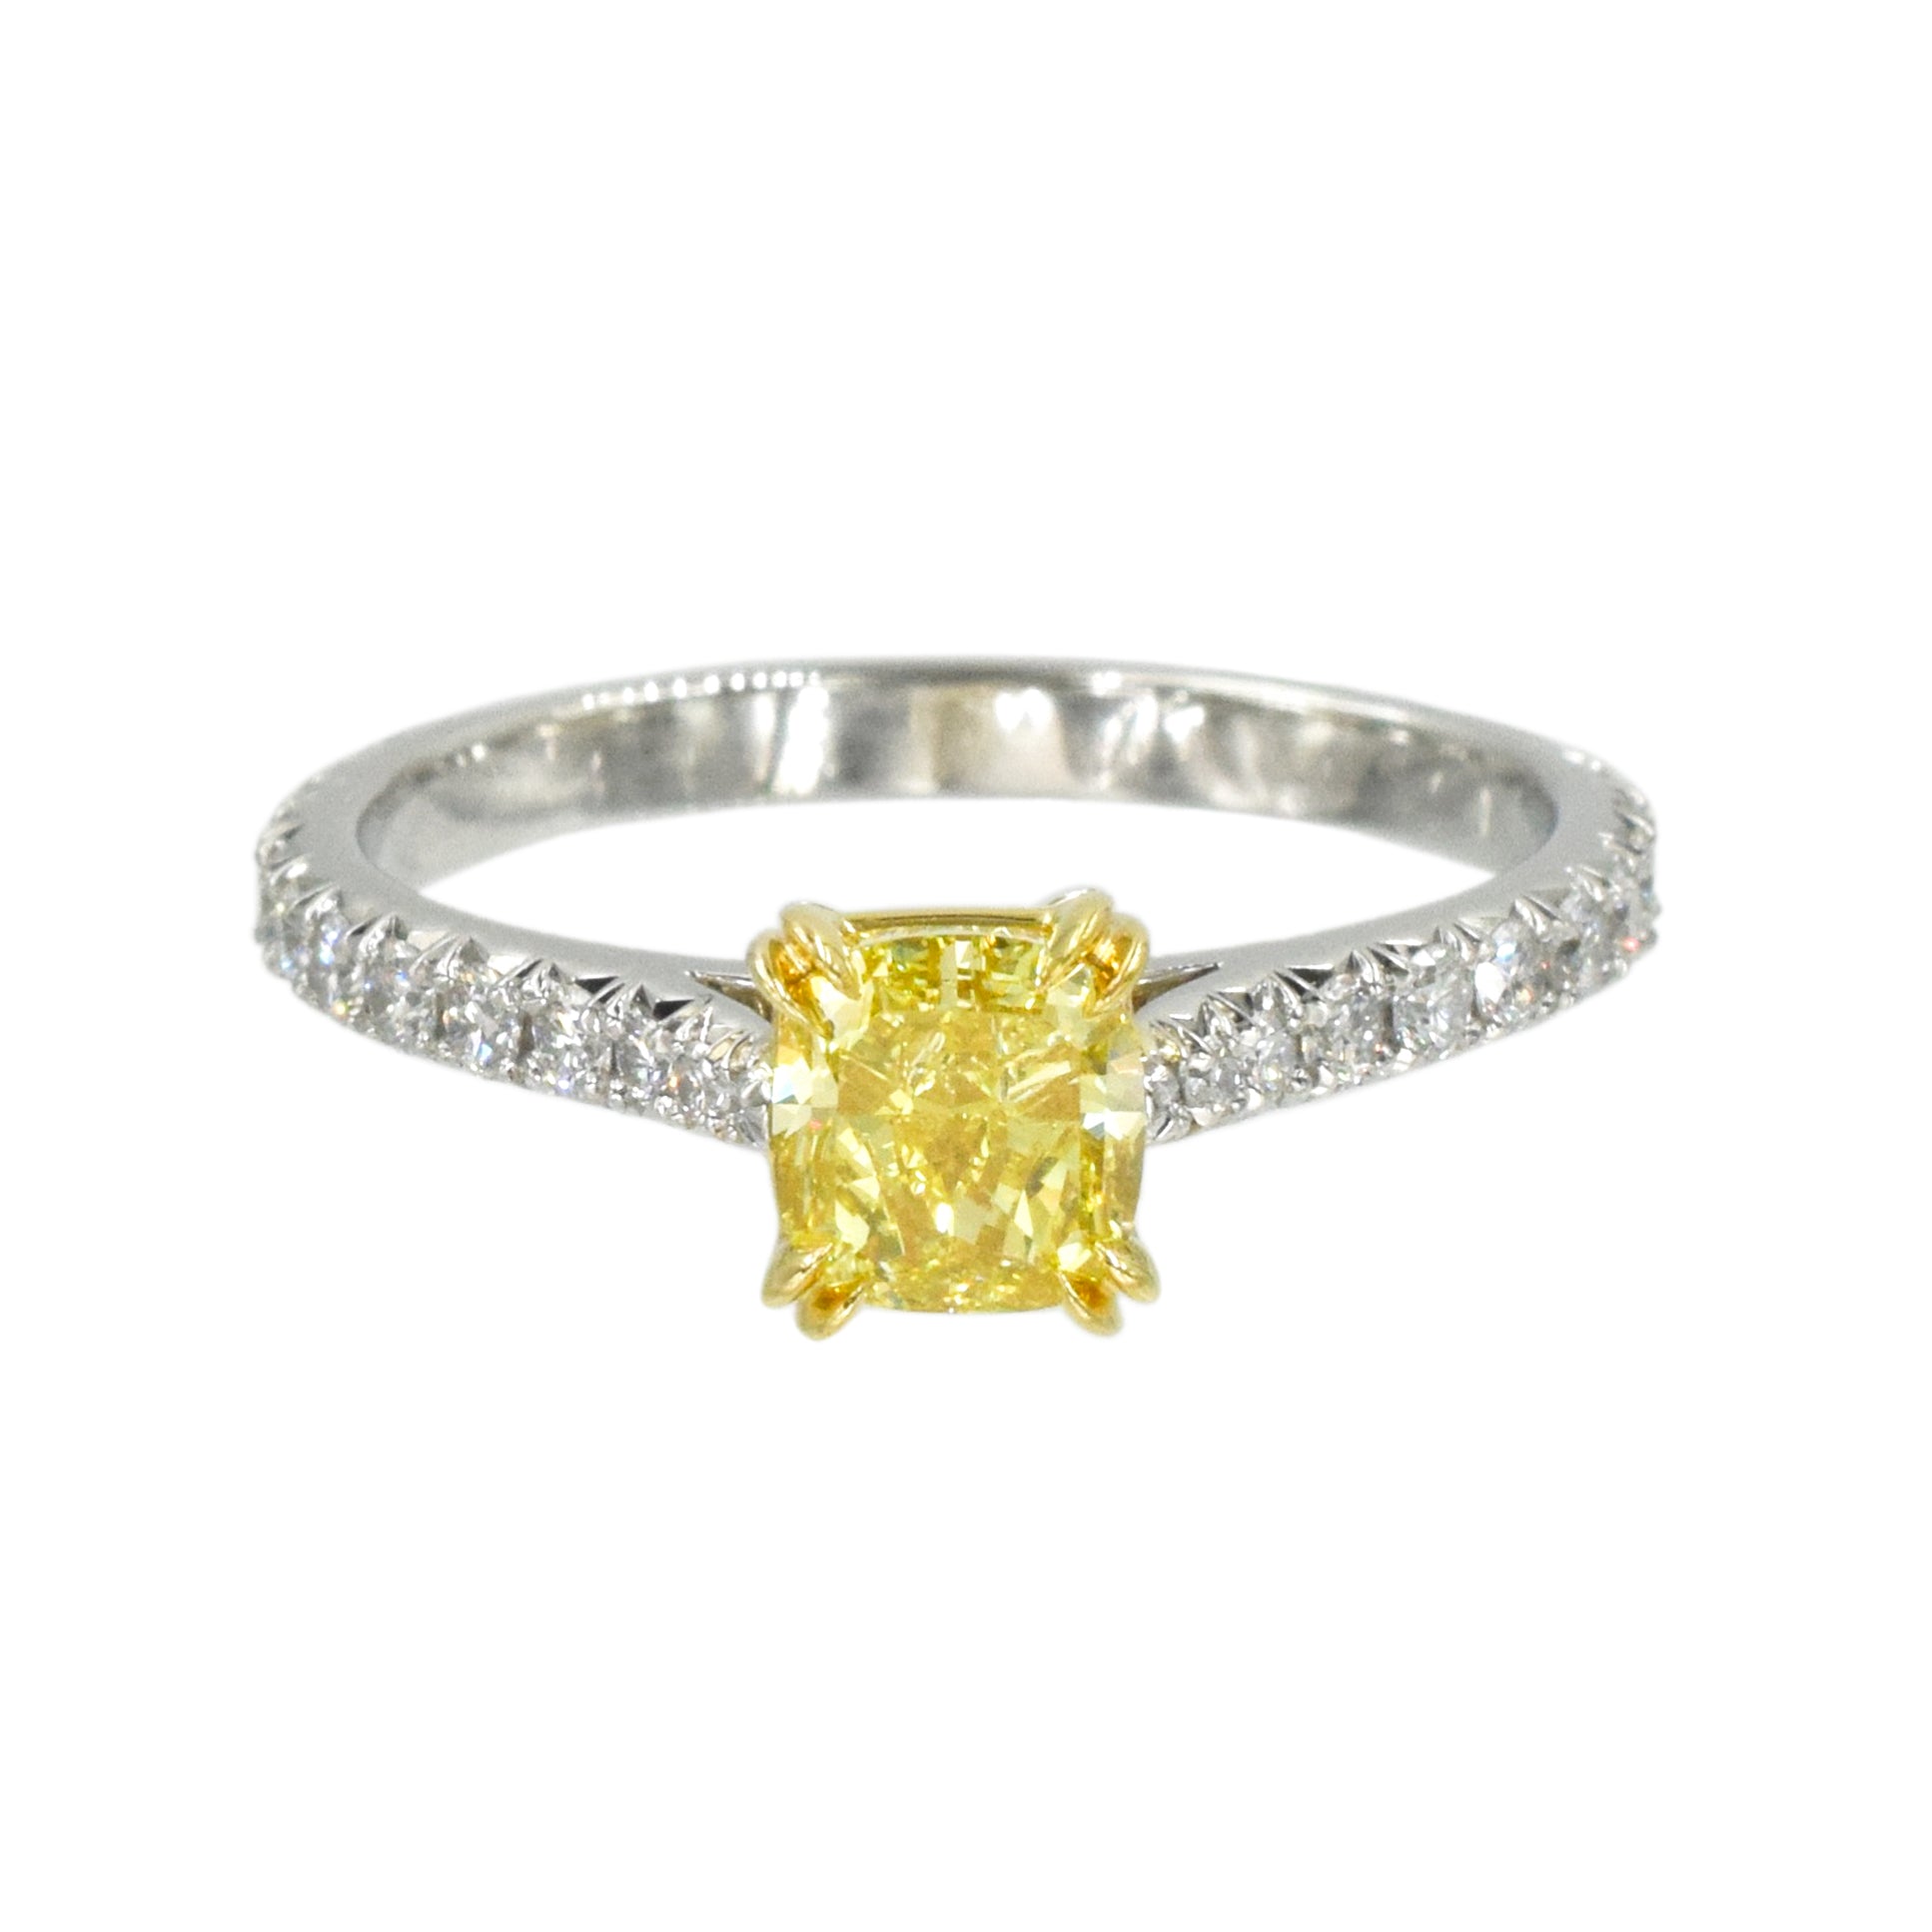 Harry Winston 1.03ct Fancy Intense Yellow Diamond Engagement Ring